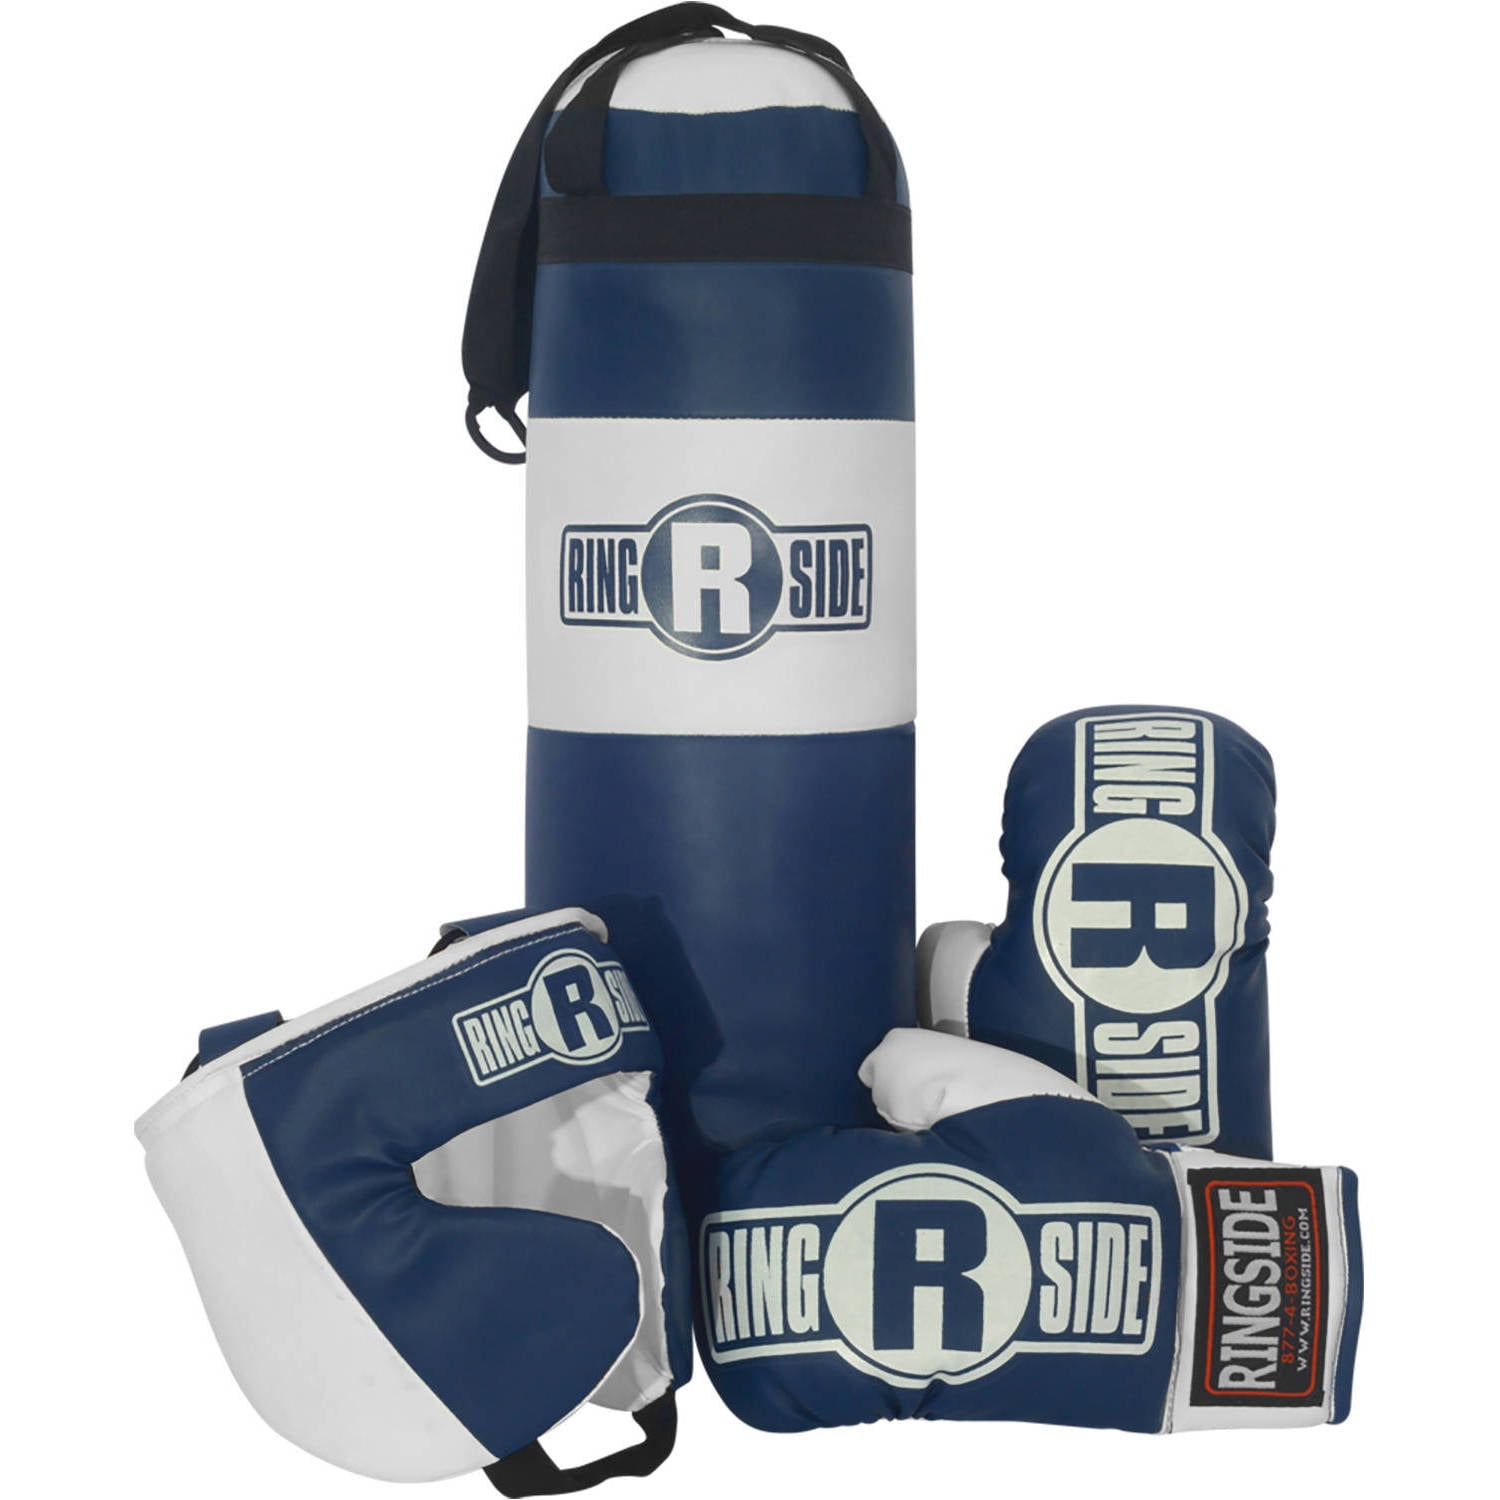 Free Del. Kids Junior Boxing Punch Bag and Gloves Children Punching Set Kit 